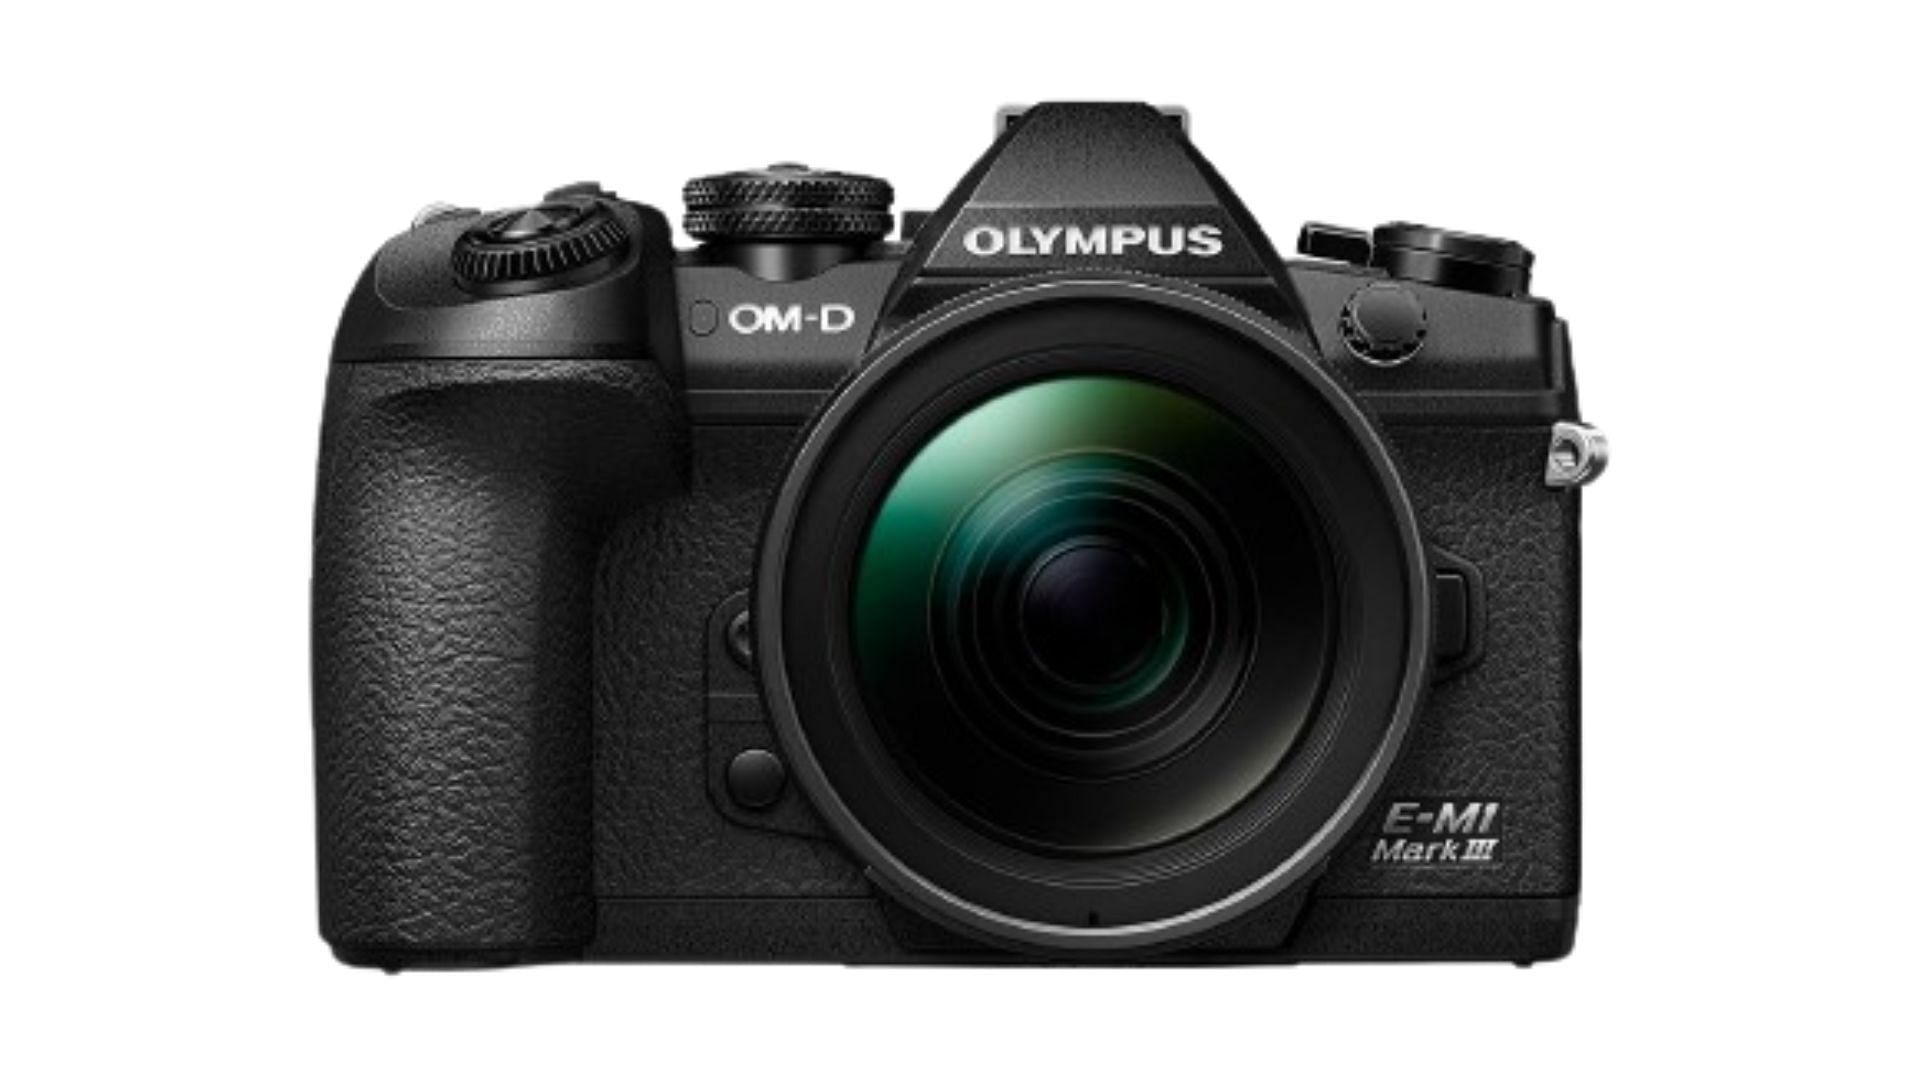 Olympus OM-D E-M1 Mark III (Image via Olympus)